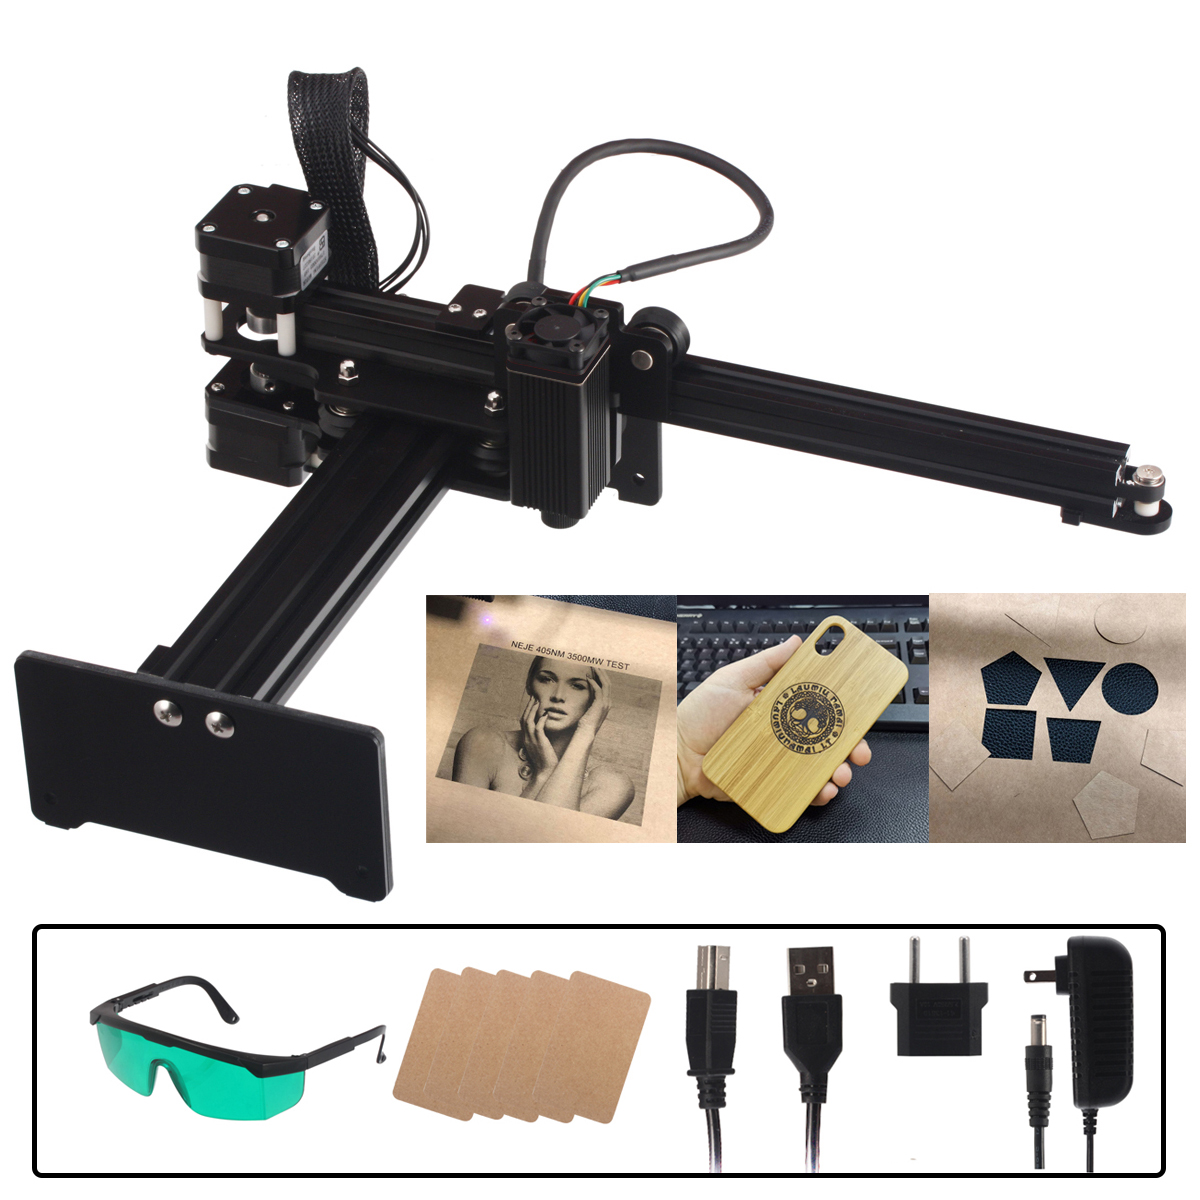 

NEJE MASTER 2 Upgraded 3500mW DIY Laser Engraving Machine CNC Wood Router Laser Engraver Cutter Printer Print Logo Pictu